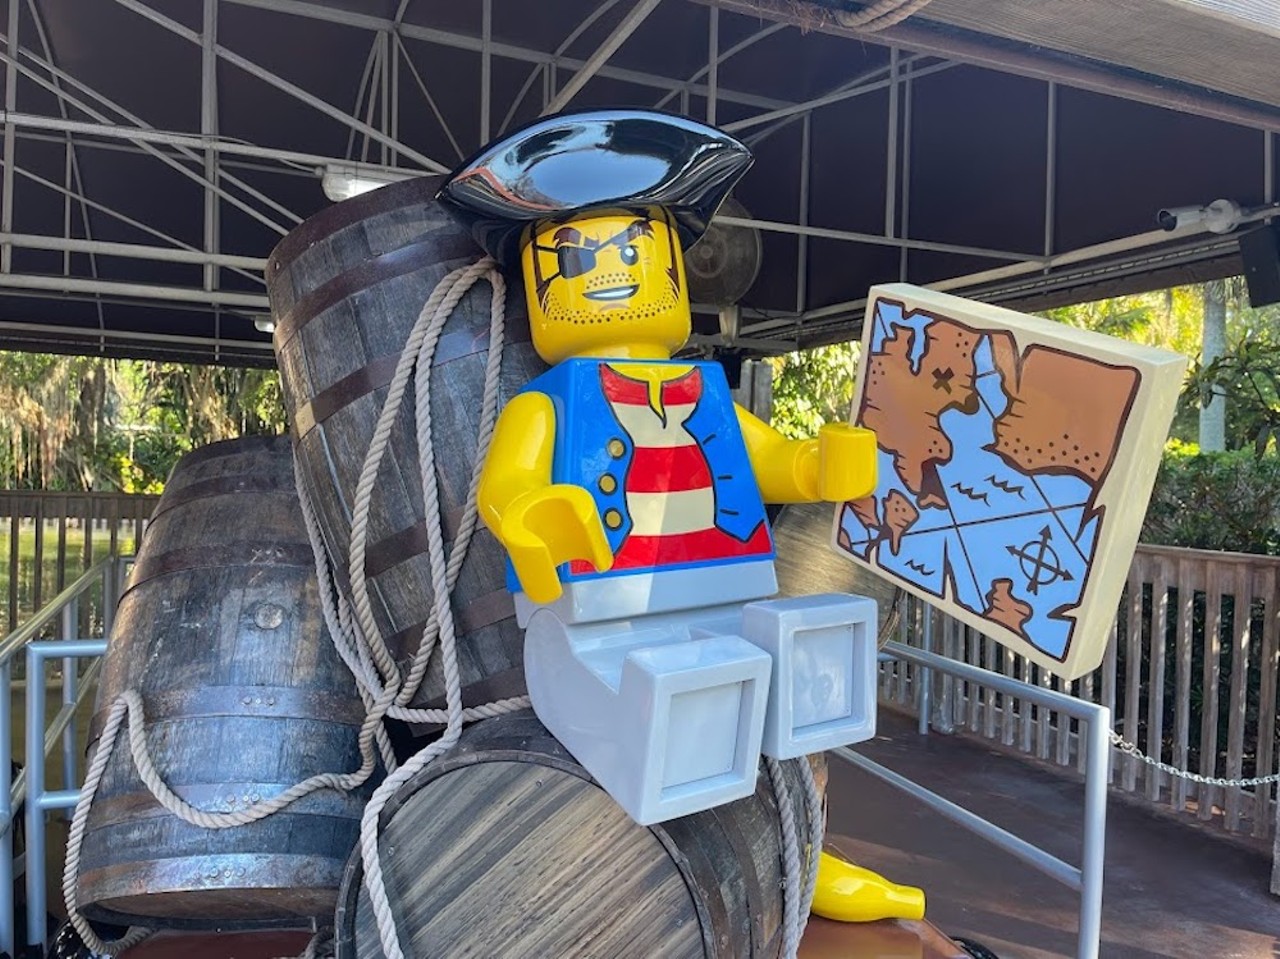 Legoland's brand new ride Pirate River Quest boat ride sets sail